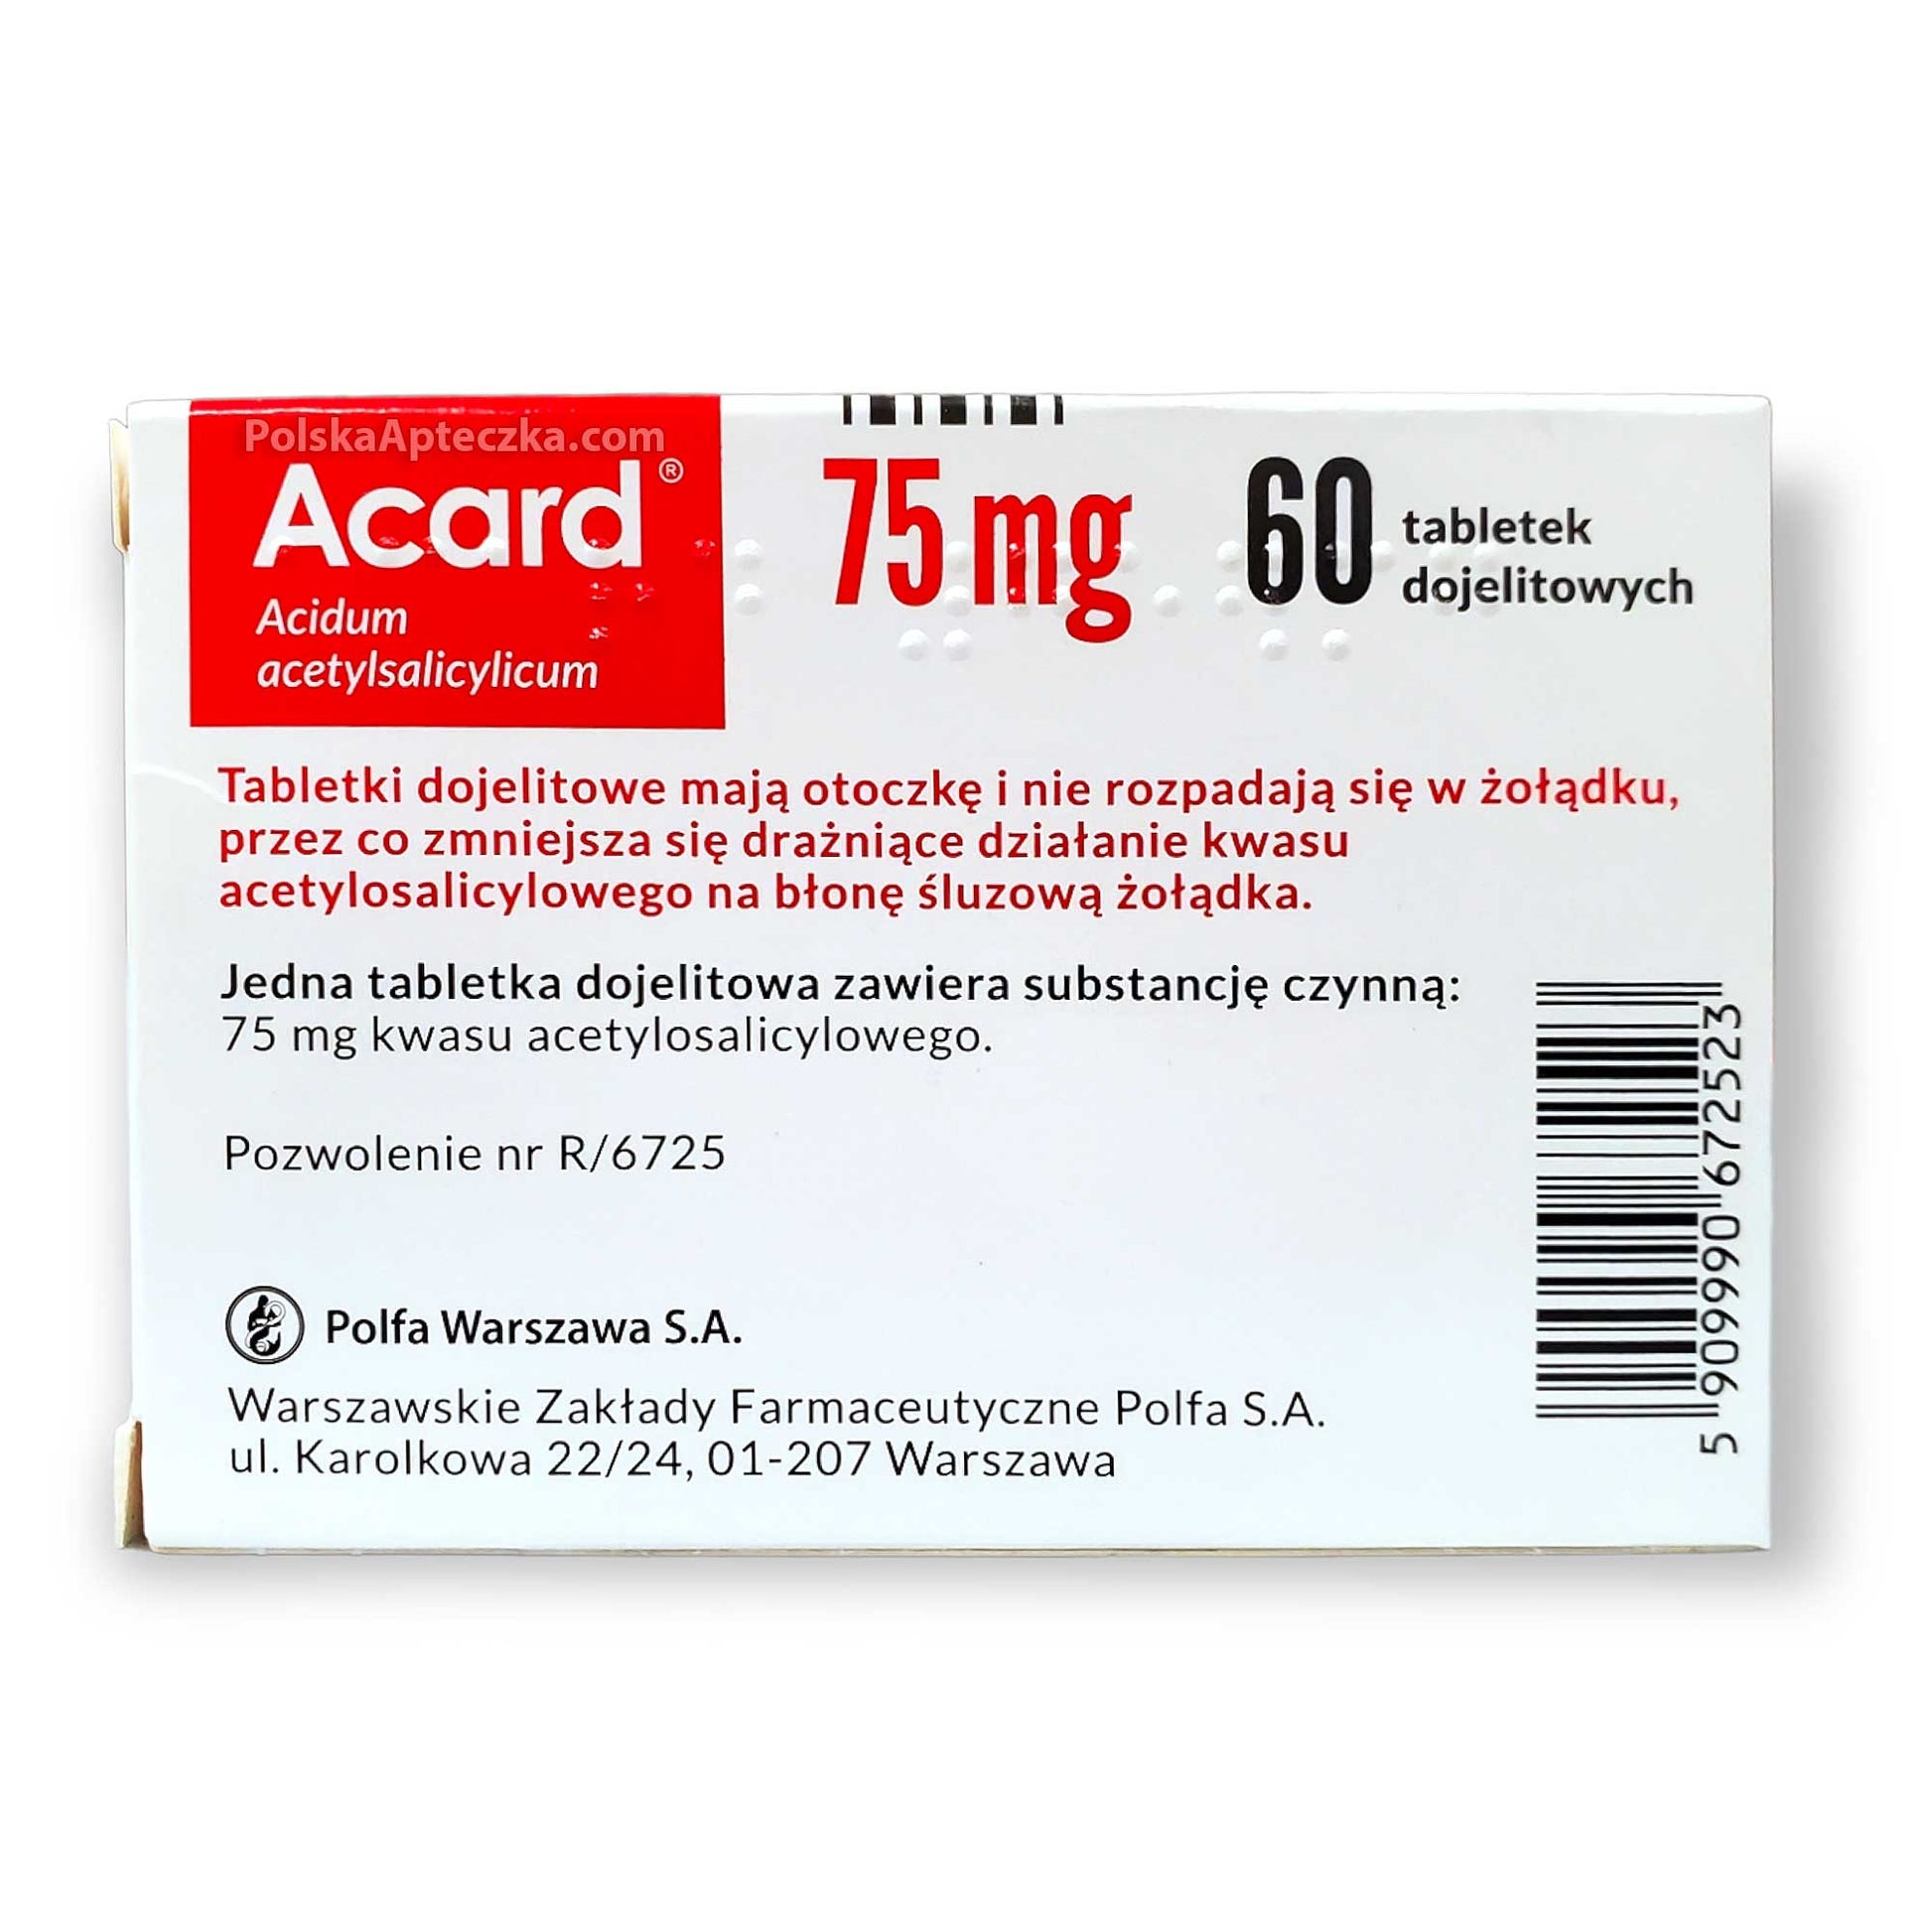 acard 75mg tablets polish pharmacy